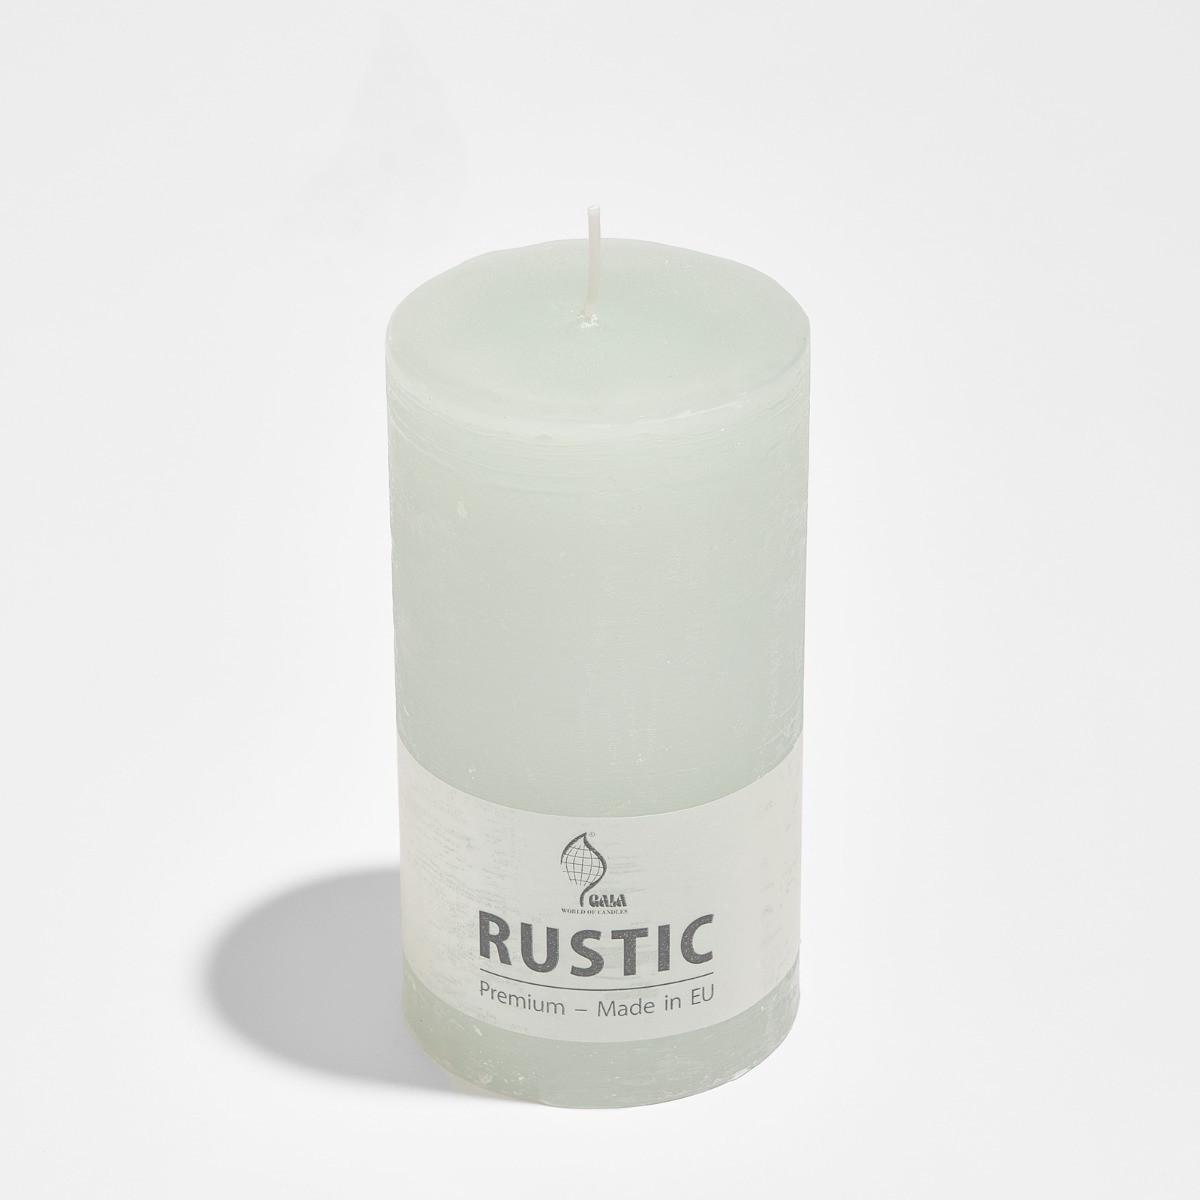 Rustic Pillar Candle, Large - Sage Green>